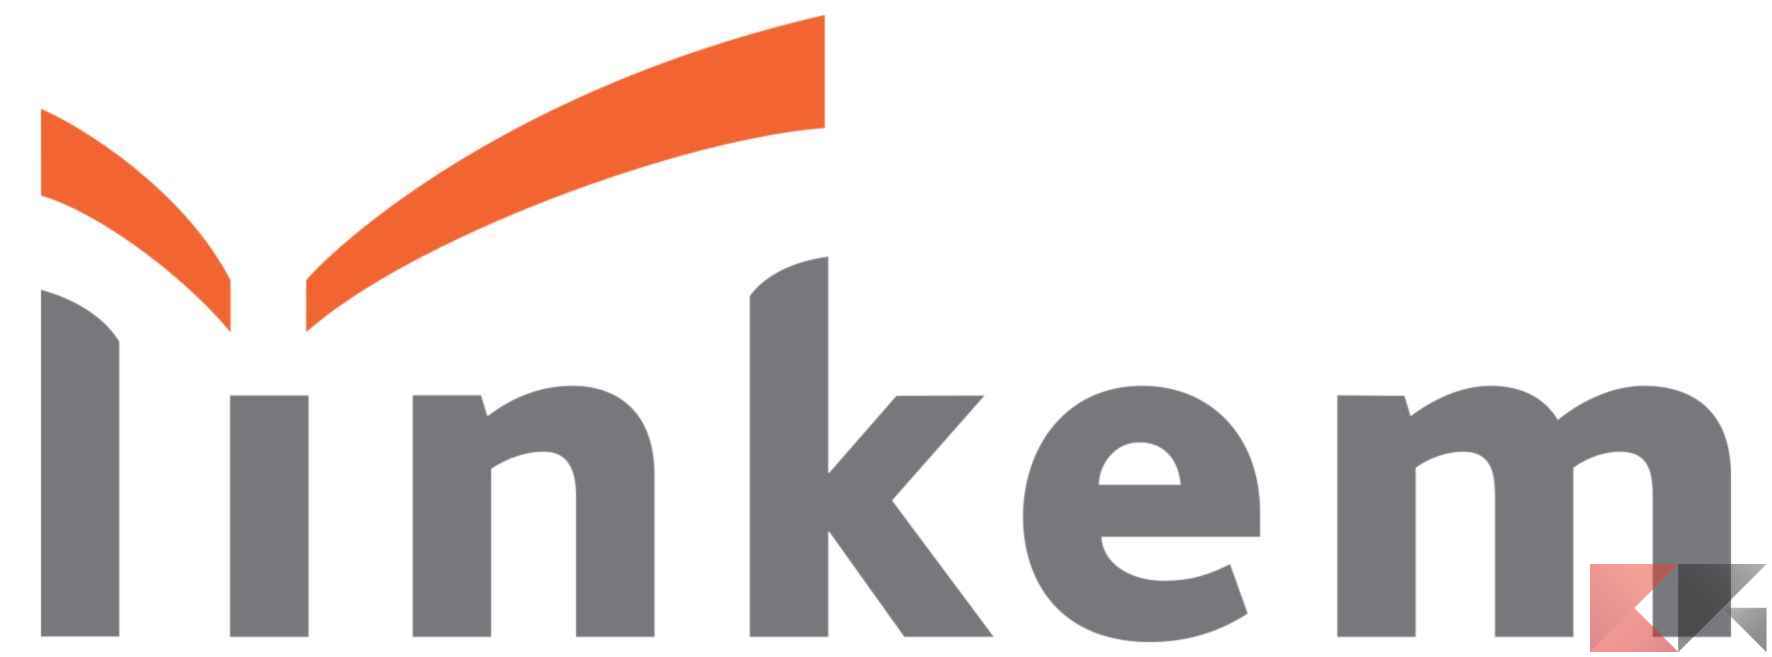 linkem logo